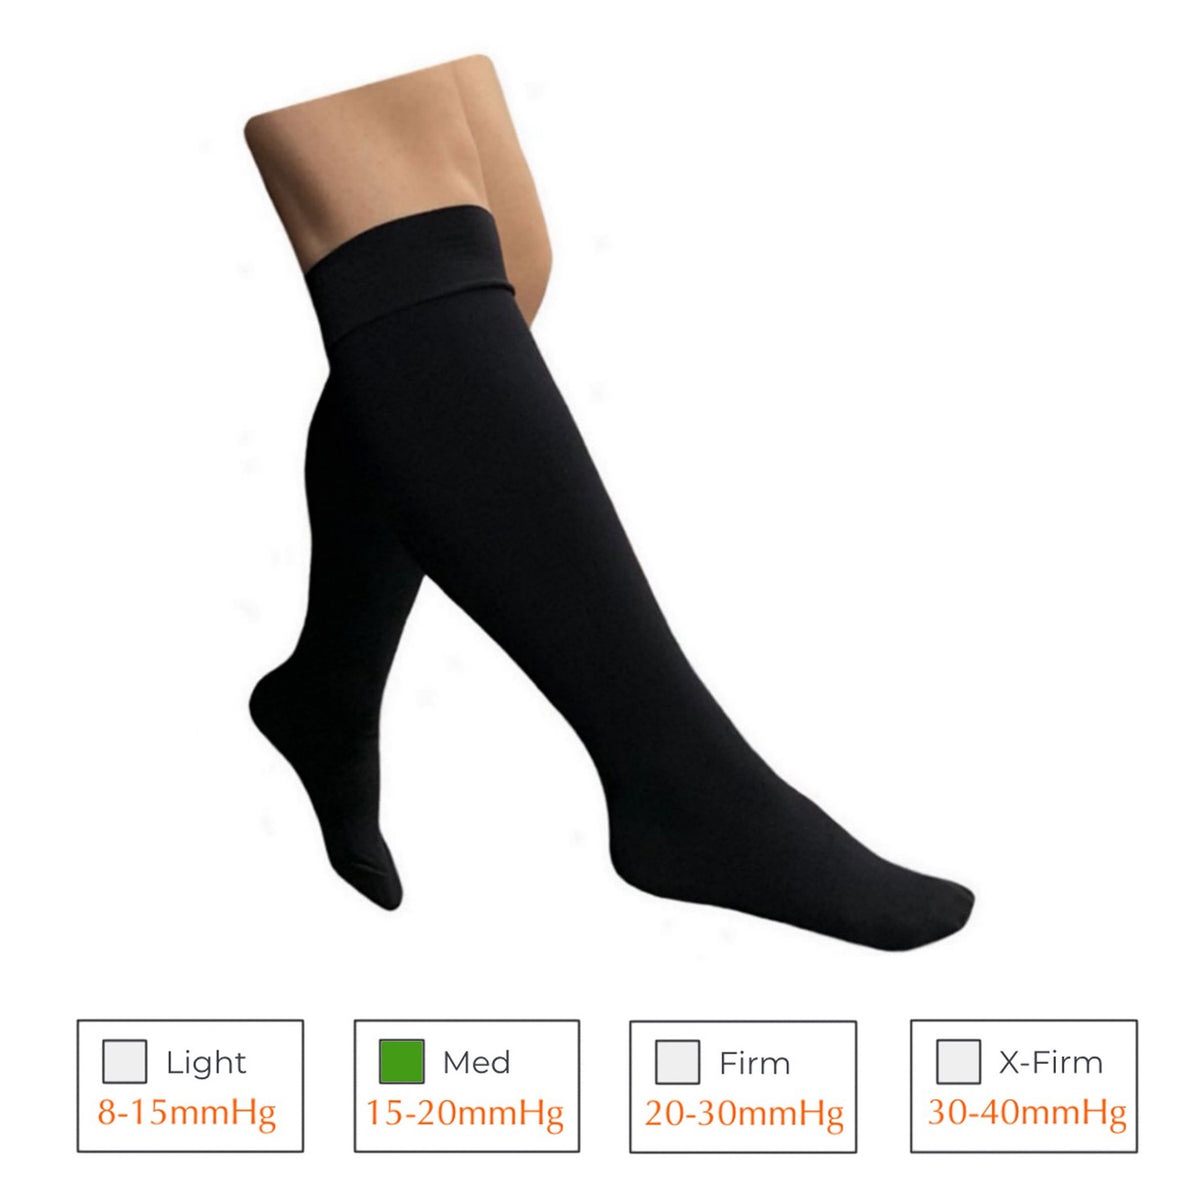  Runee 15-20 mmHg Medical Open Toe Compression Sock Knee High Hosiery  Stocking for Swelling, Varicose Vein, Edema (Beige, L/XL) : Health &  Household